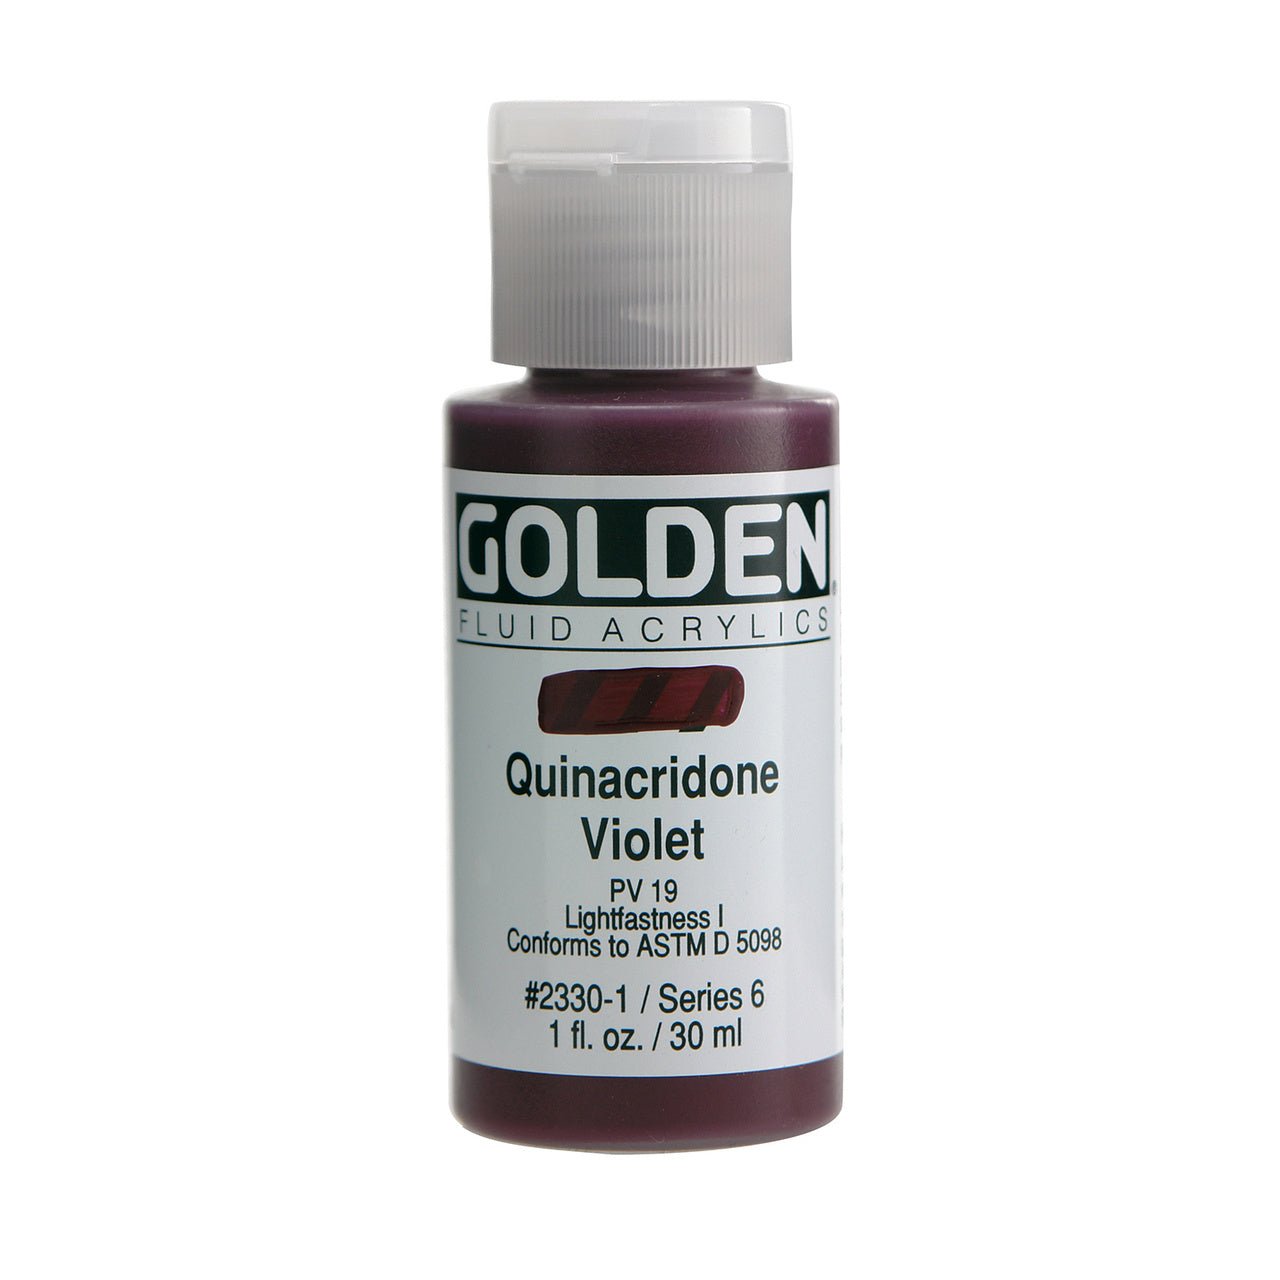 Golden Fluid Acrylic Quinacridone Violet 1 oz - merriartist.com